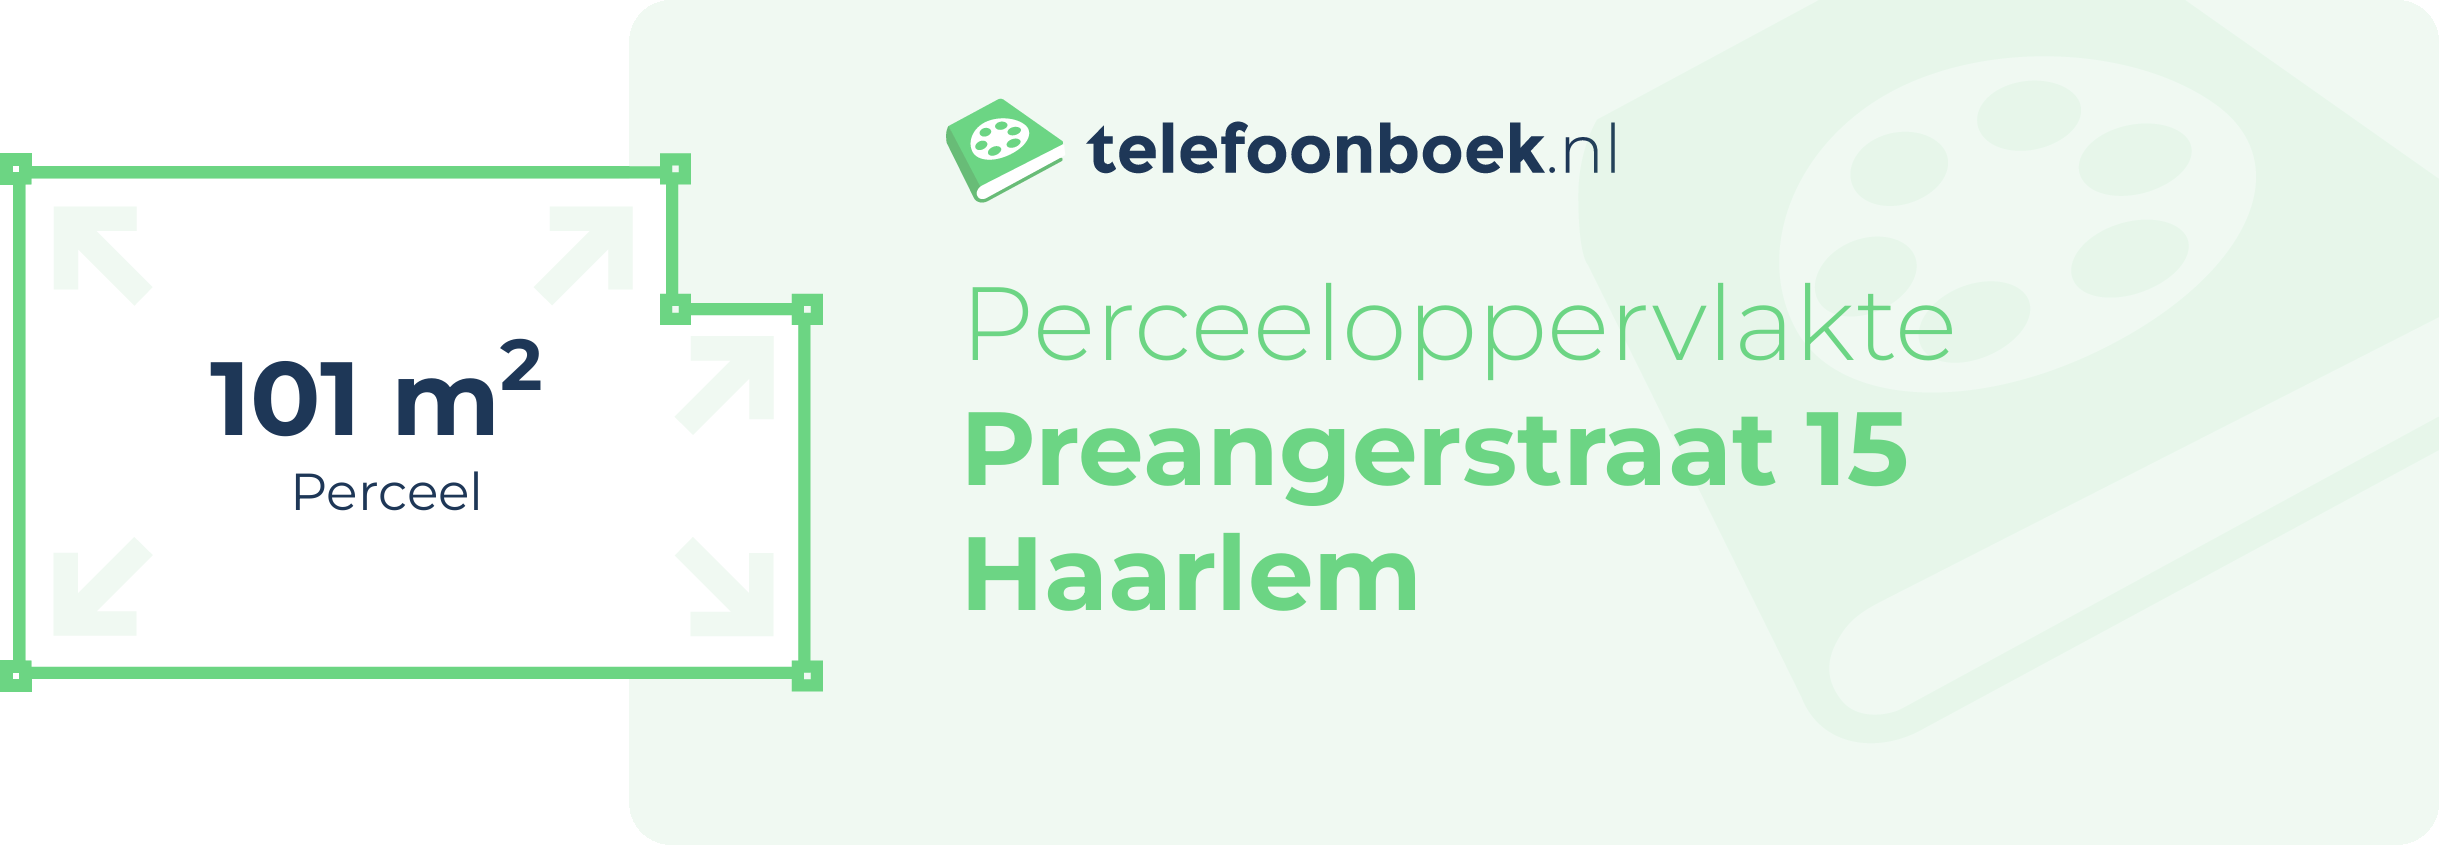 Perceeloppervlakte Preangerstraat 15 Haarlem